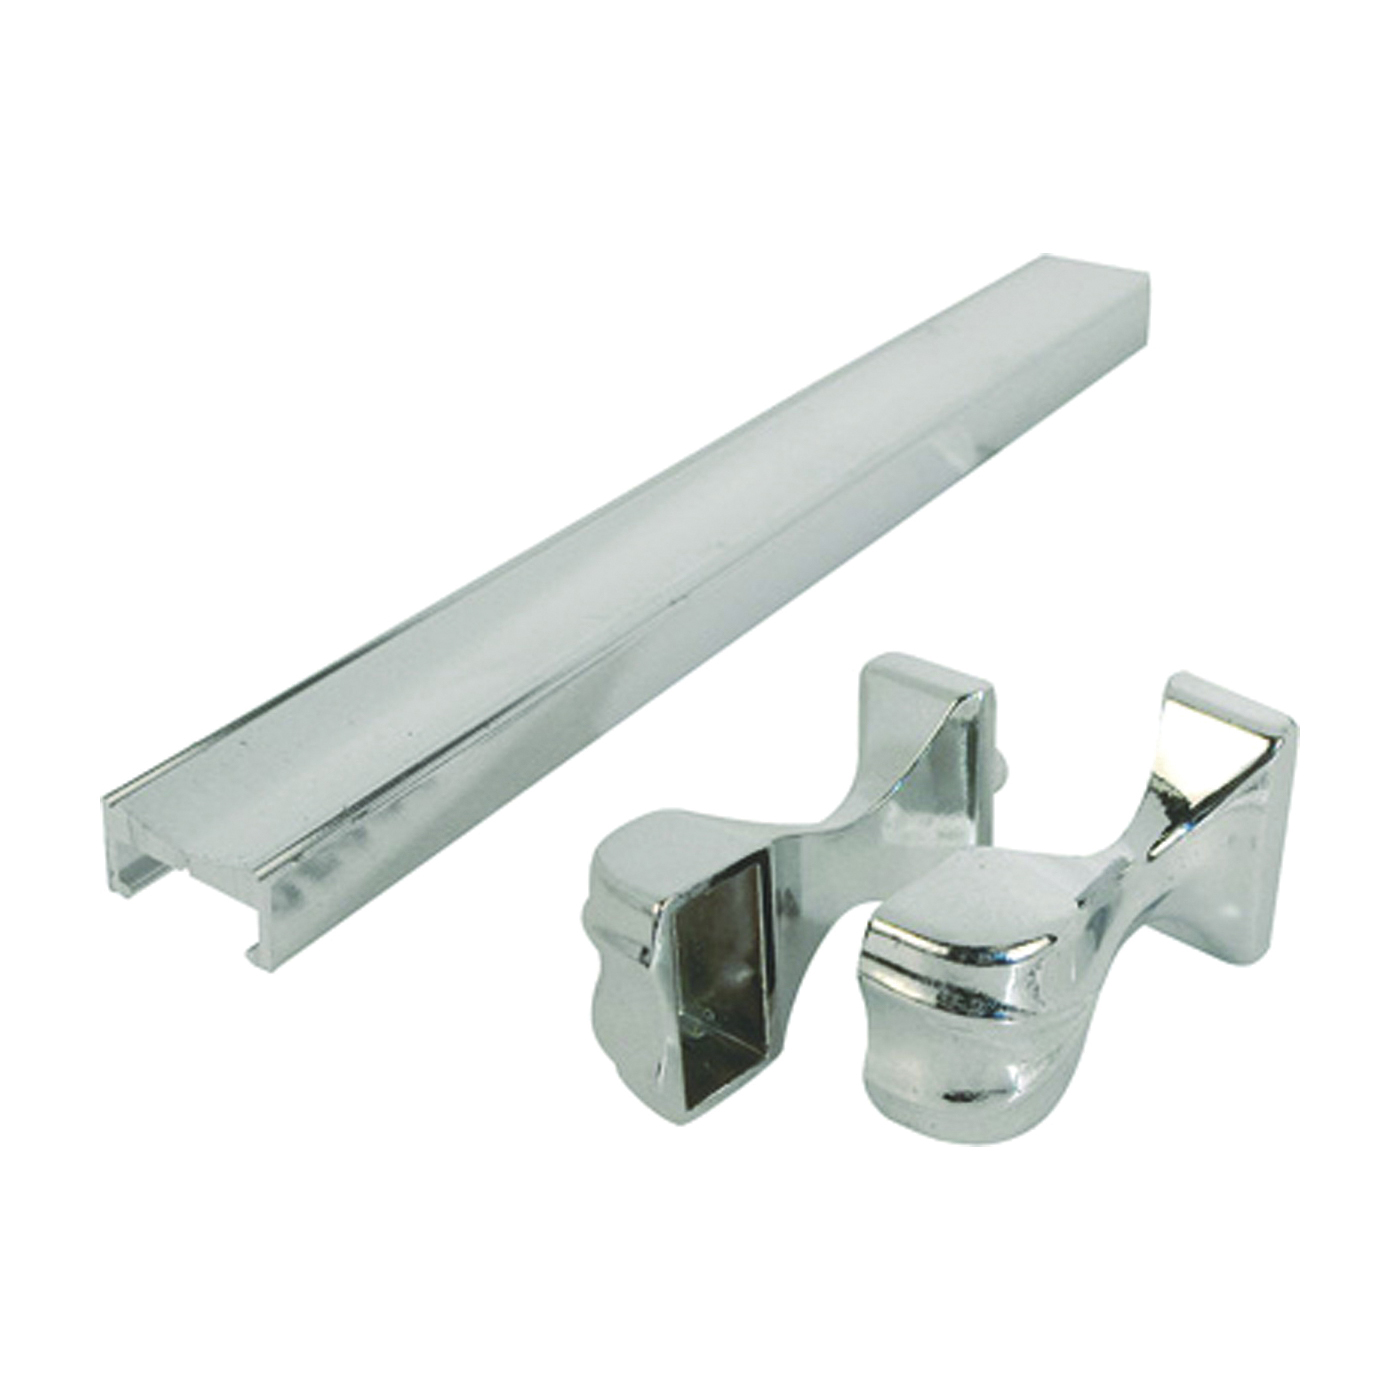 M 6093 Towel Bar and Bracket, Aluminum, Chrome, For: Shower and Tub Enclosure Doors